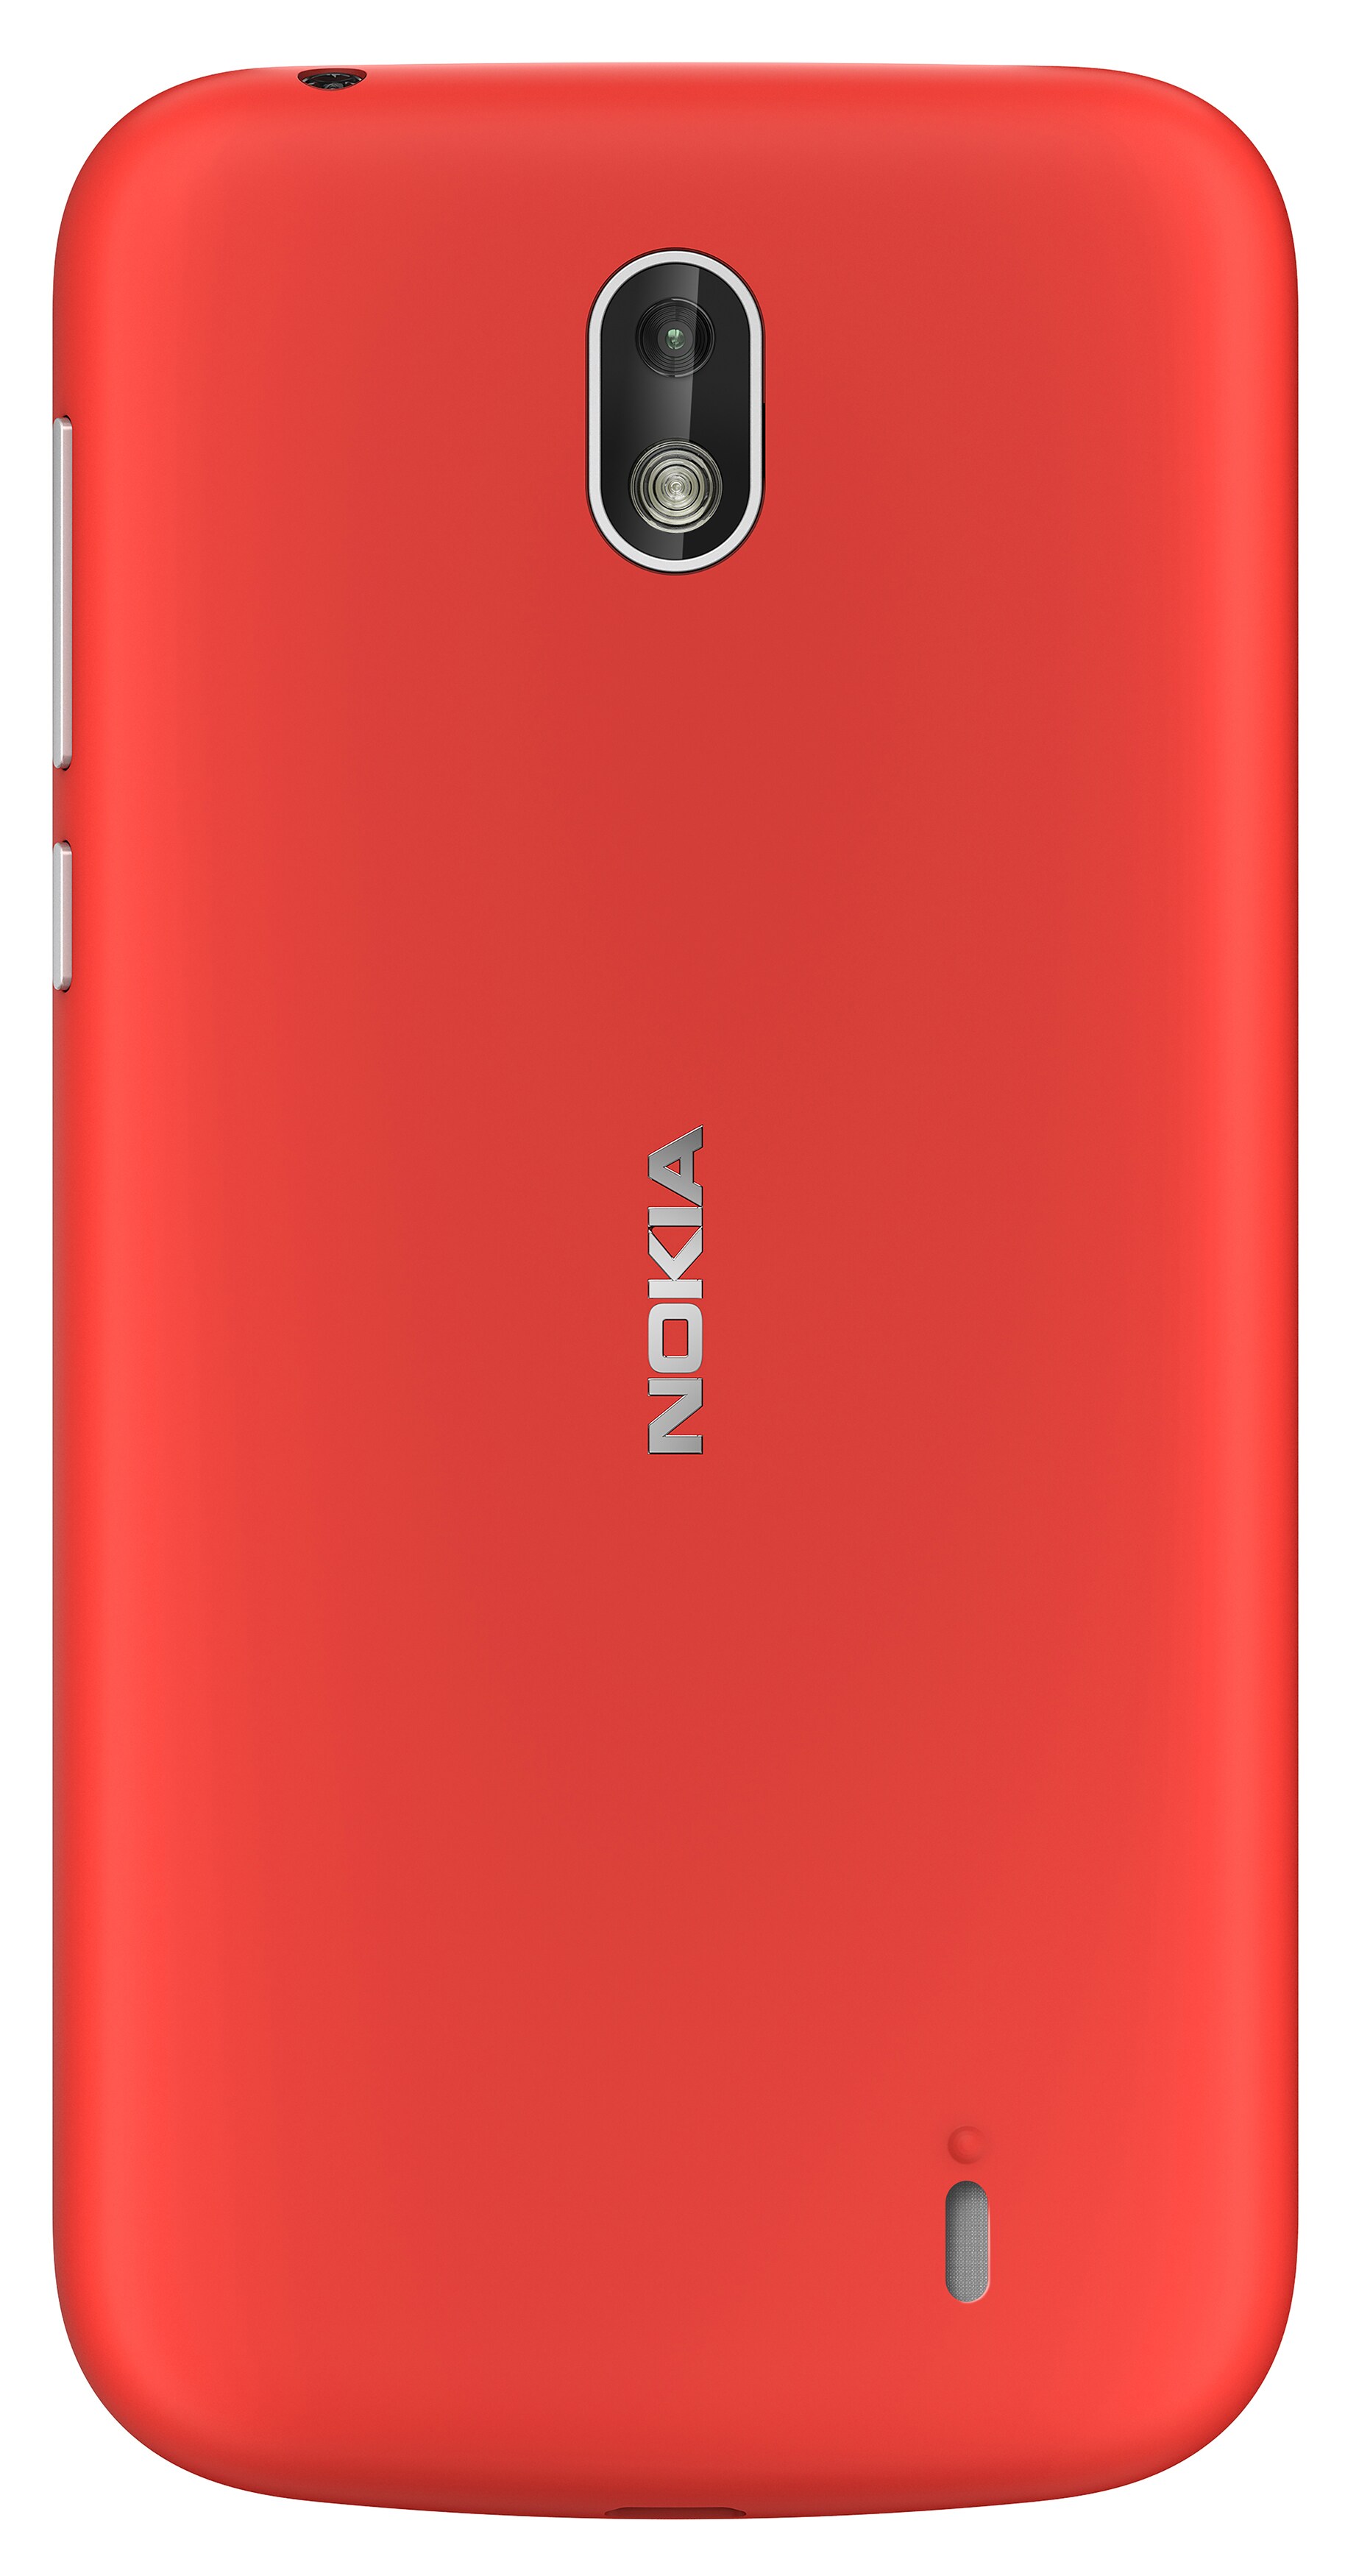 Nokia 1 smarttelefon (varm rød) - Mobiltelefon - Elkjøp